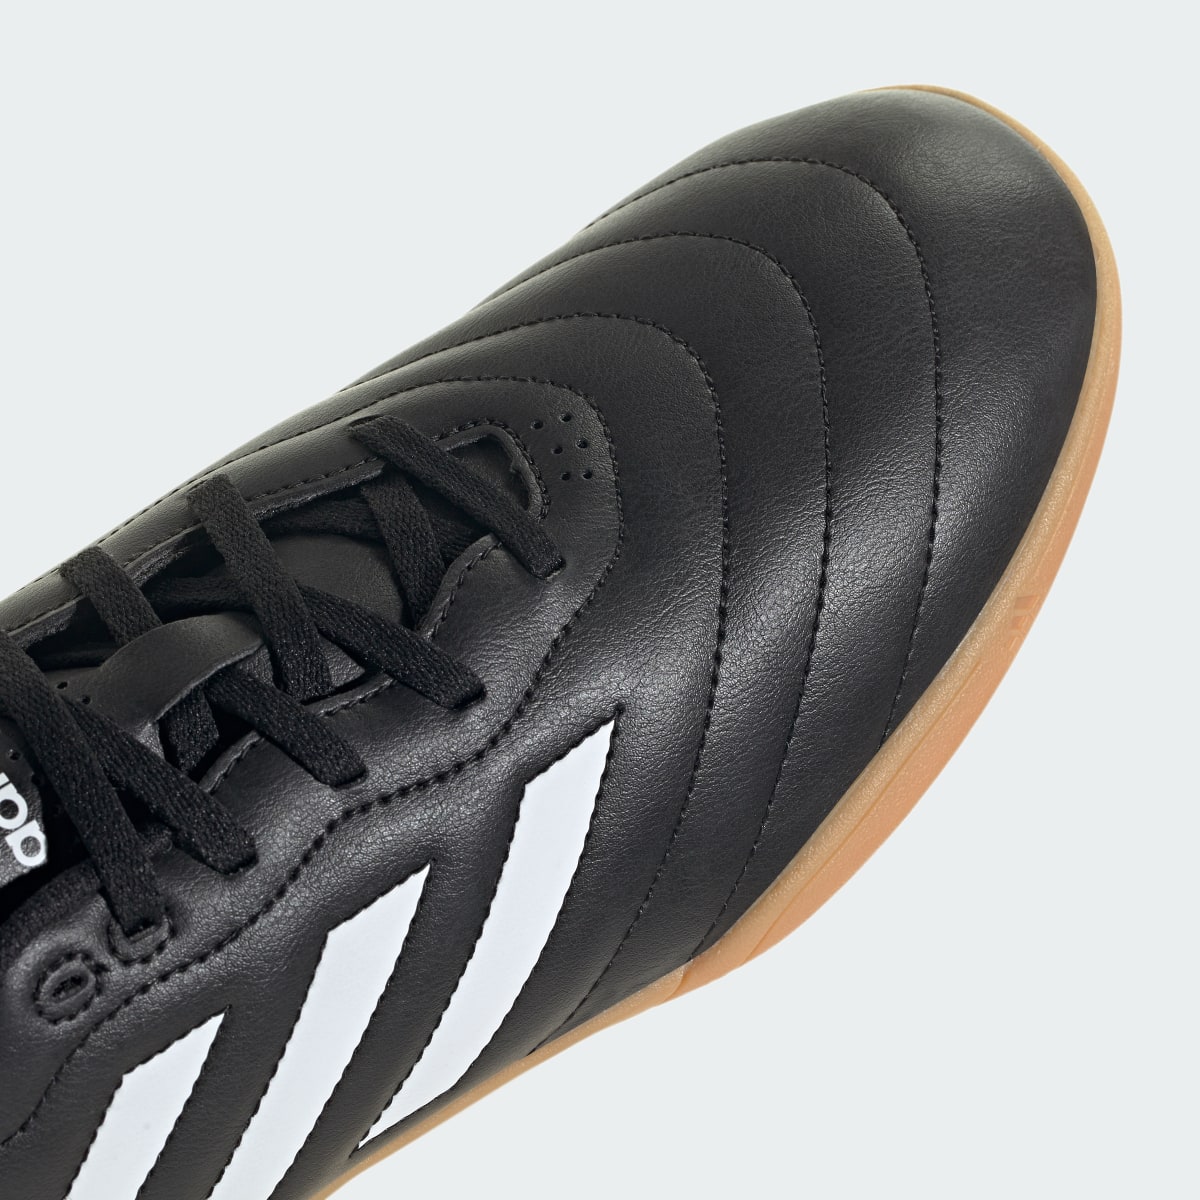 Adidas Goletto VIII Indoor Boots. 8